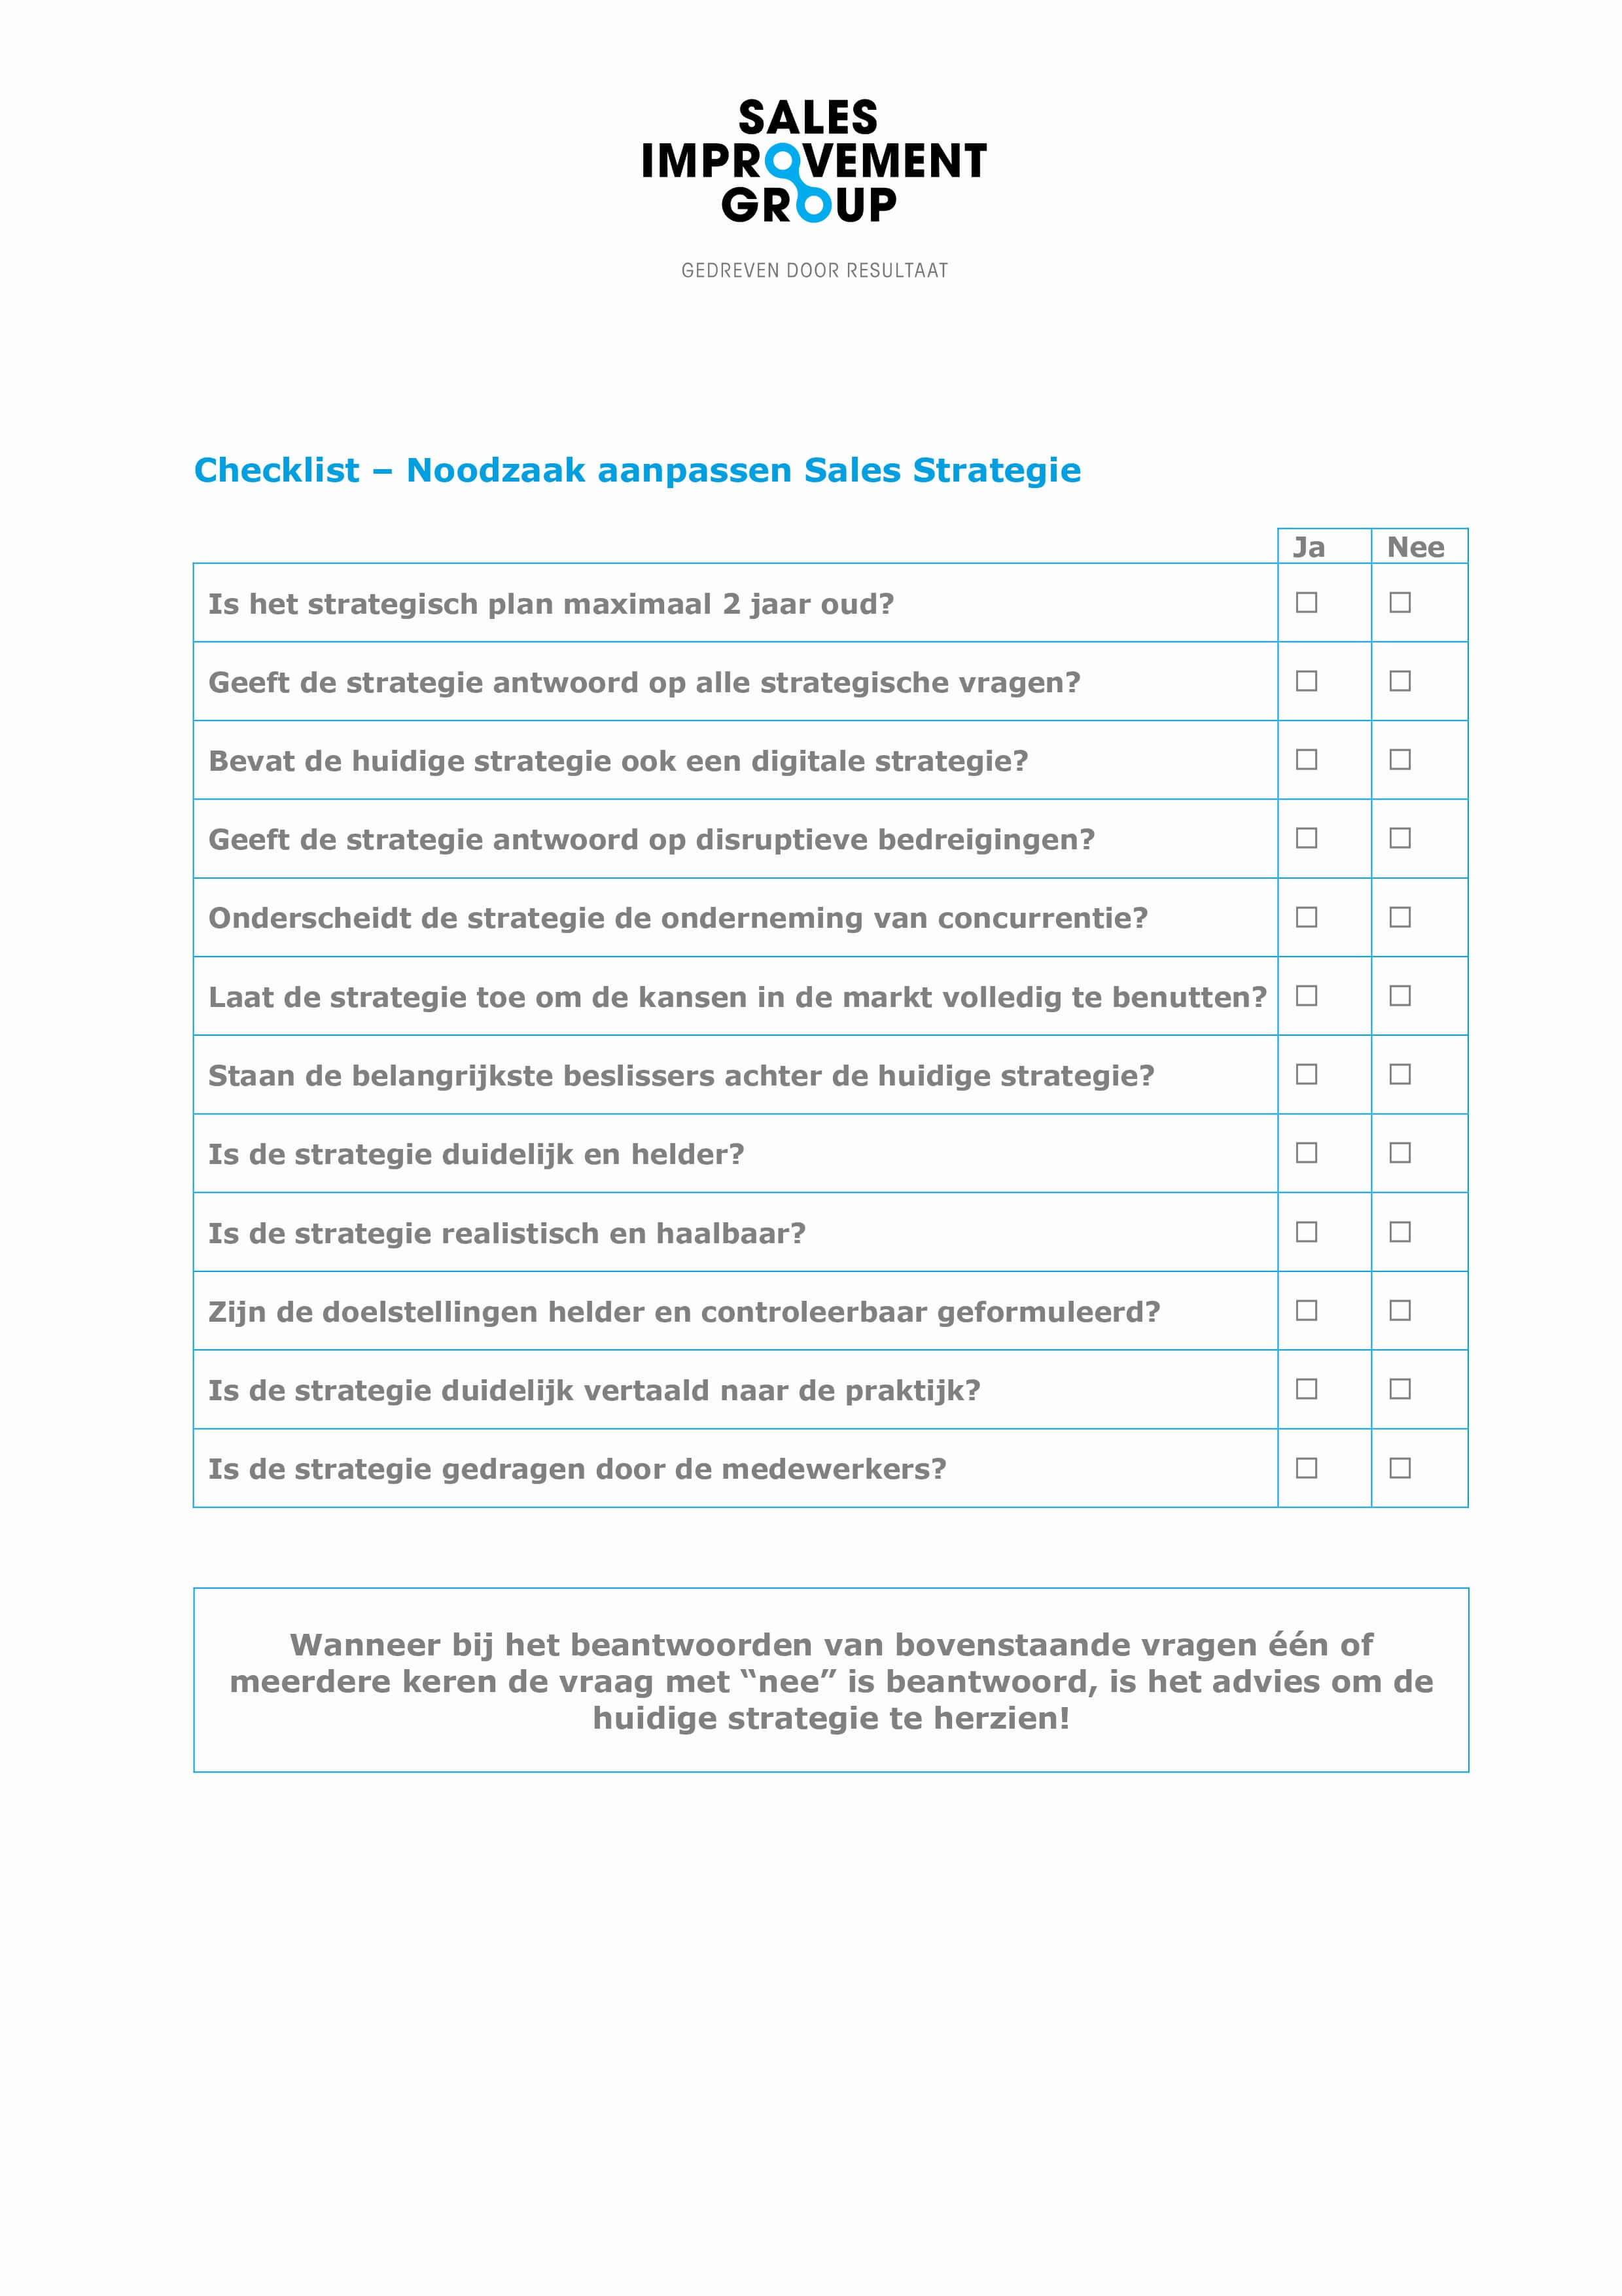 Checklist Necessity of Adjusting Sales Strategy